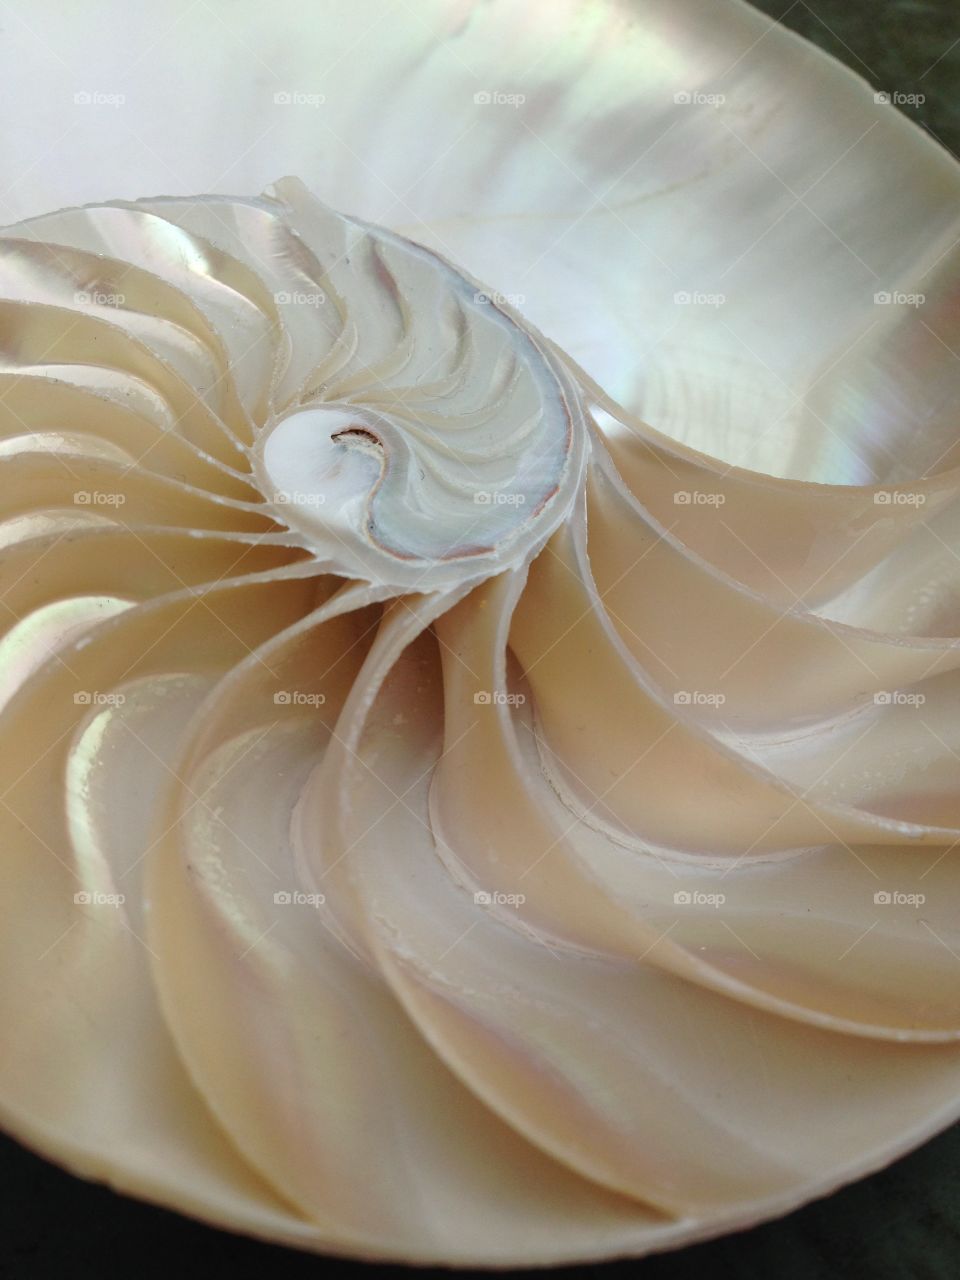 Nautilus shell cross section spiral symmetry pompilius seashell Fibonacci sequence swirl snail mollusk 